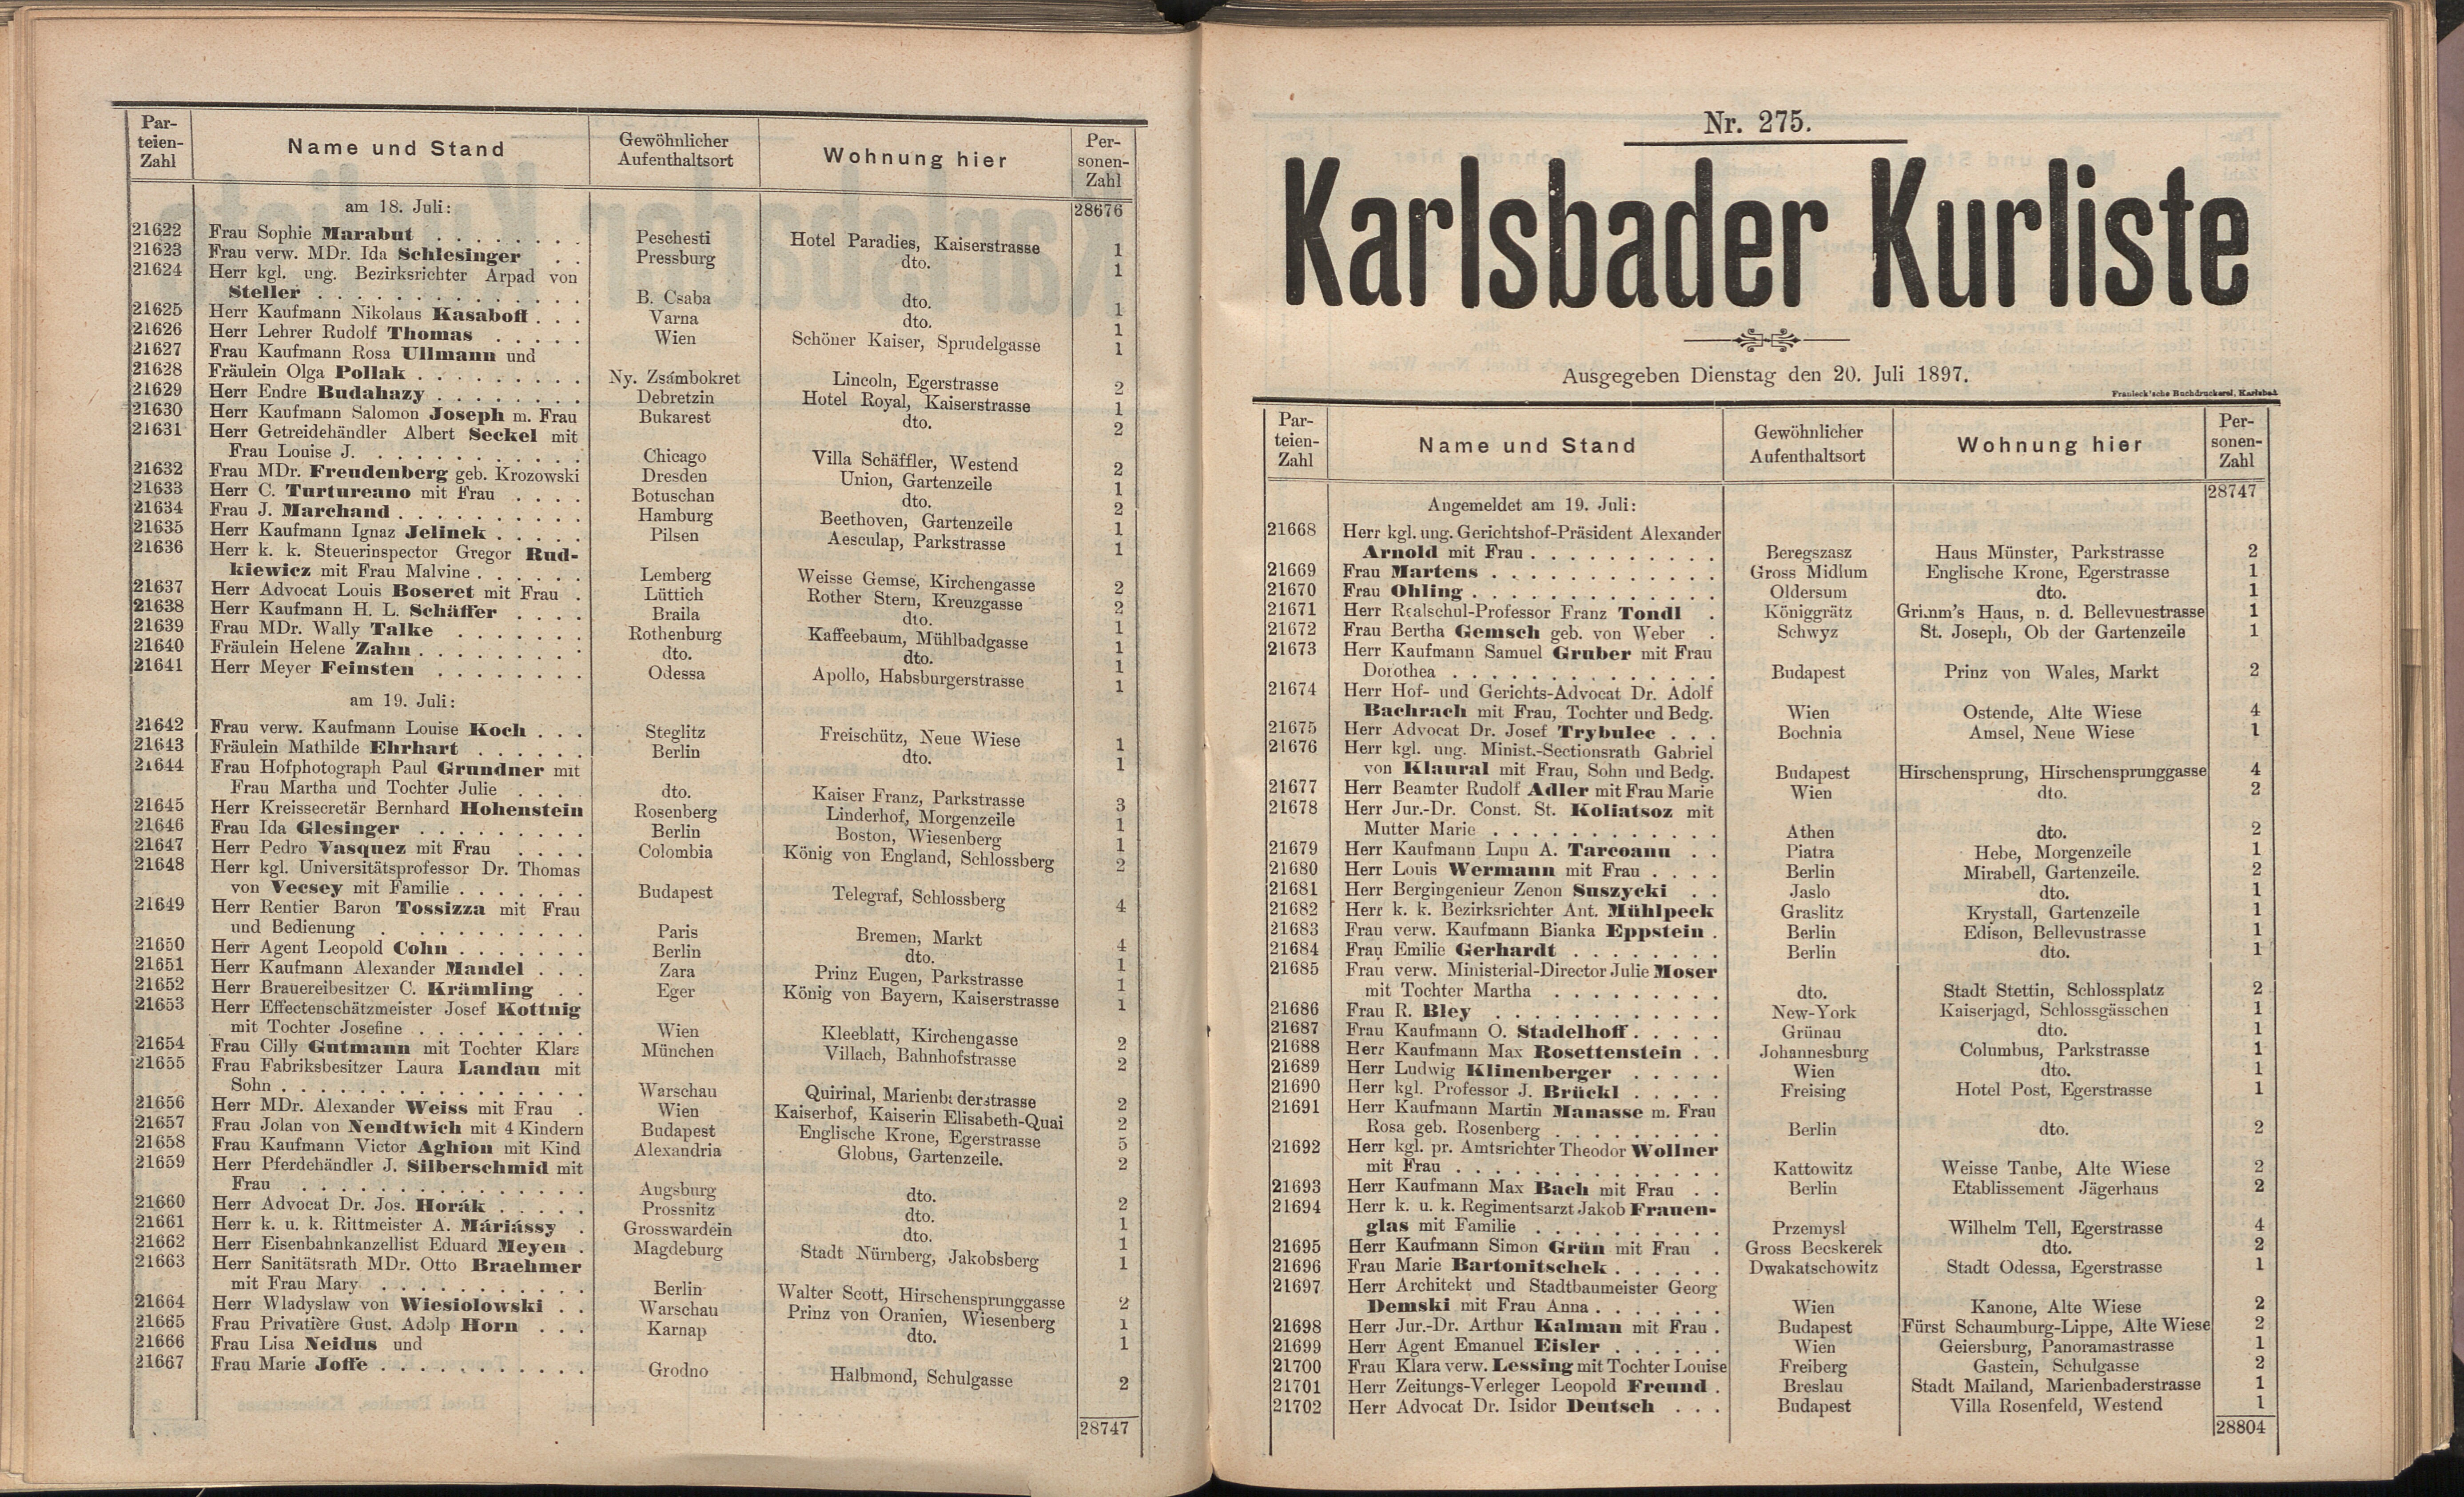 294. soap-kv_knihovna_karlsbader-kurliste-1897_2950